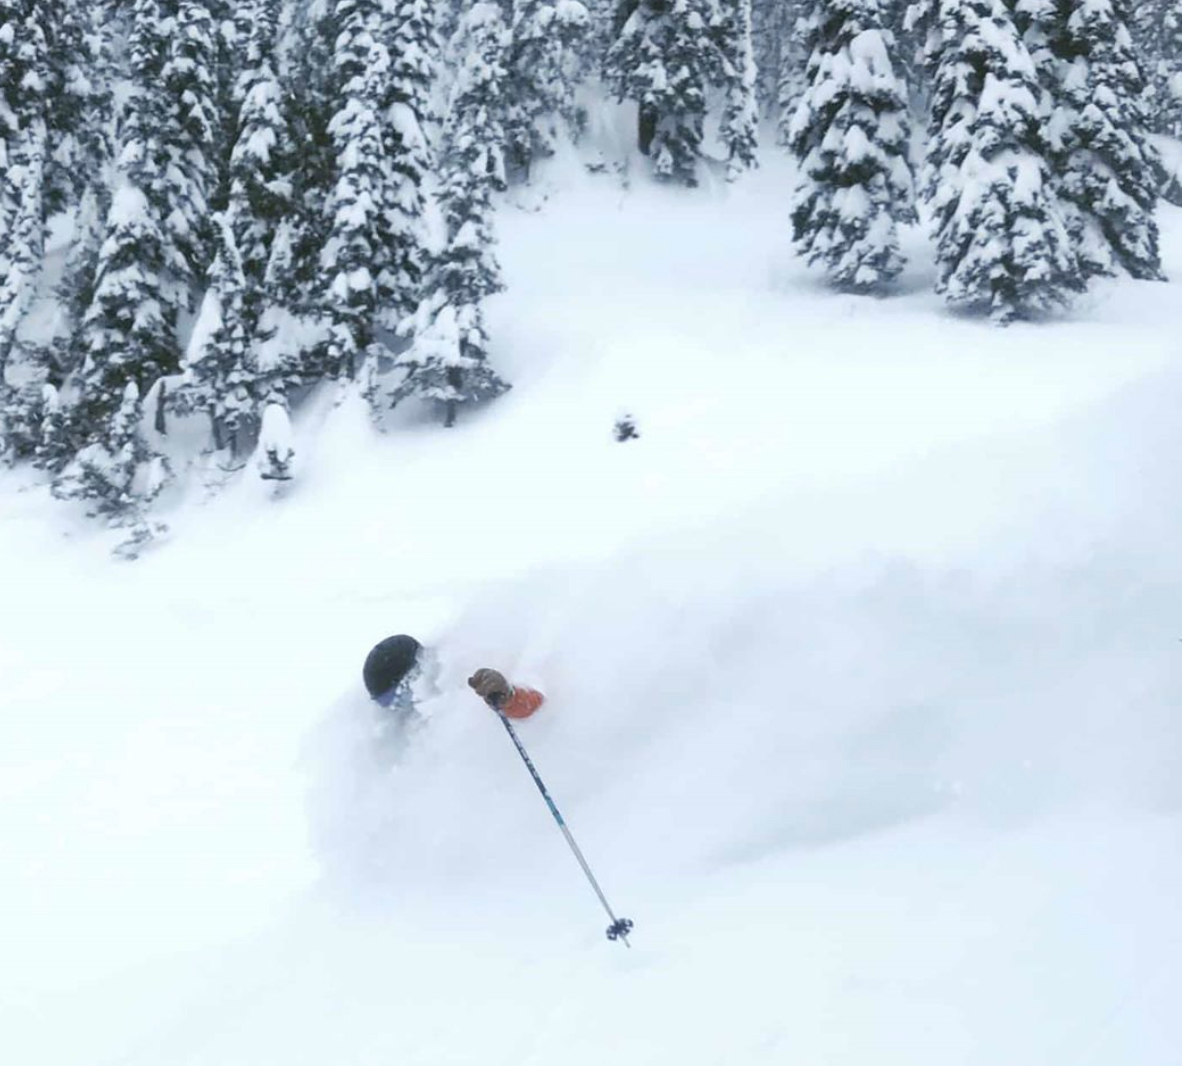 bc powder skier faceshots - Powder Canada